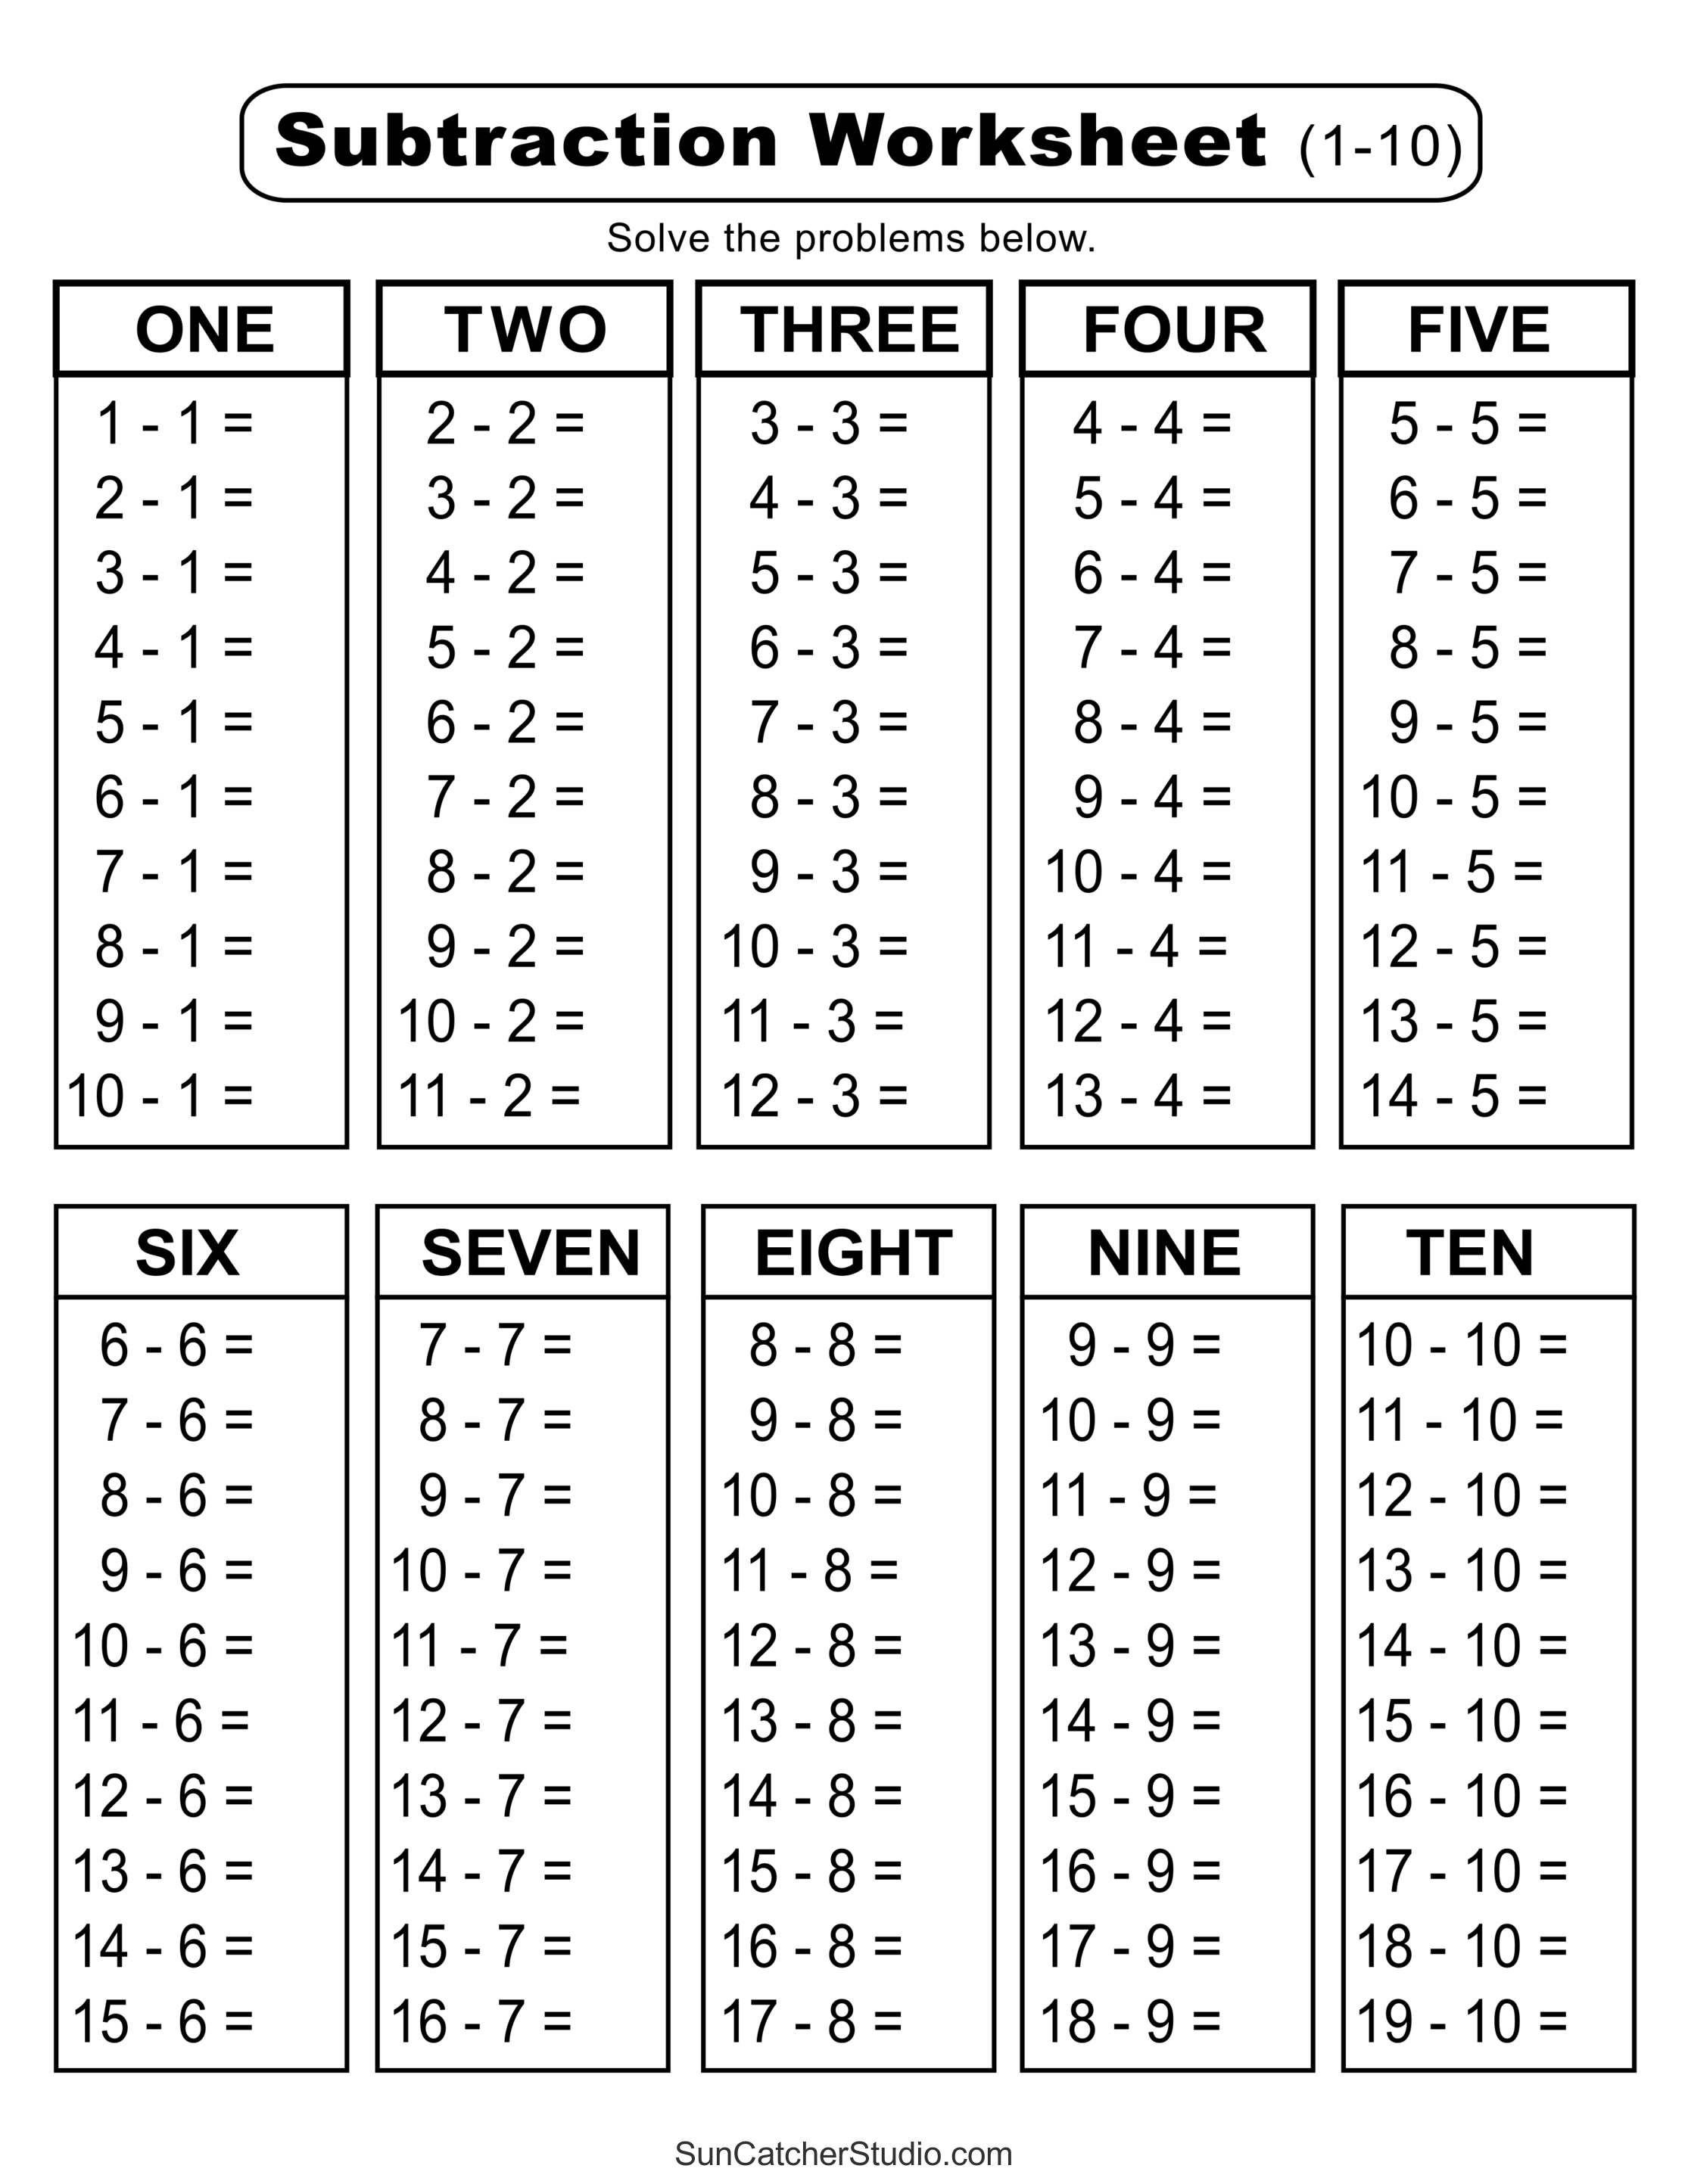 subtraction-tables-worksheets-charts-math-drills-pdf-diy